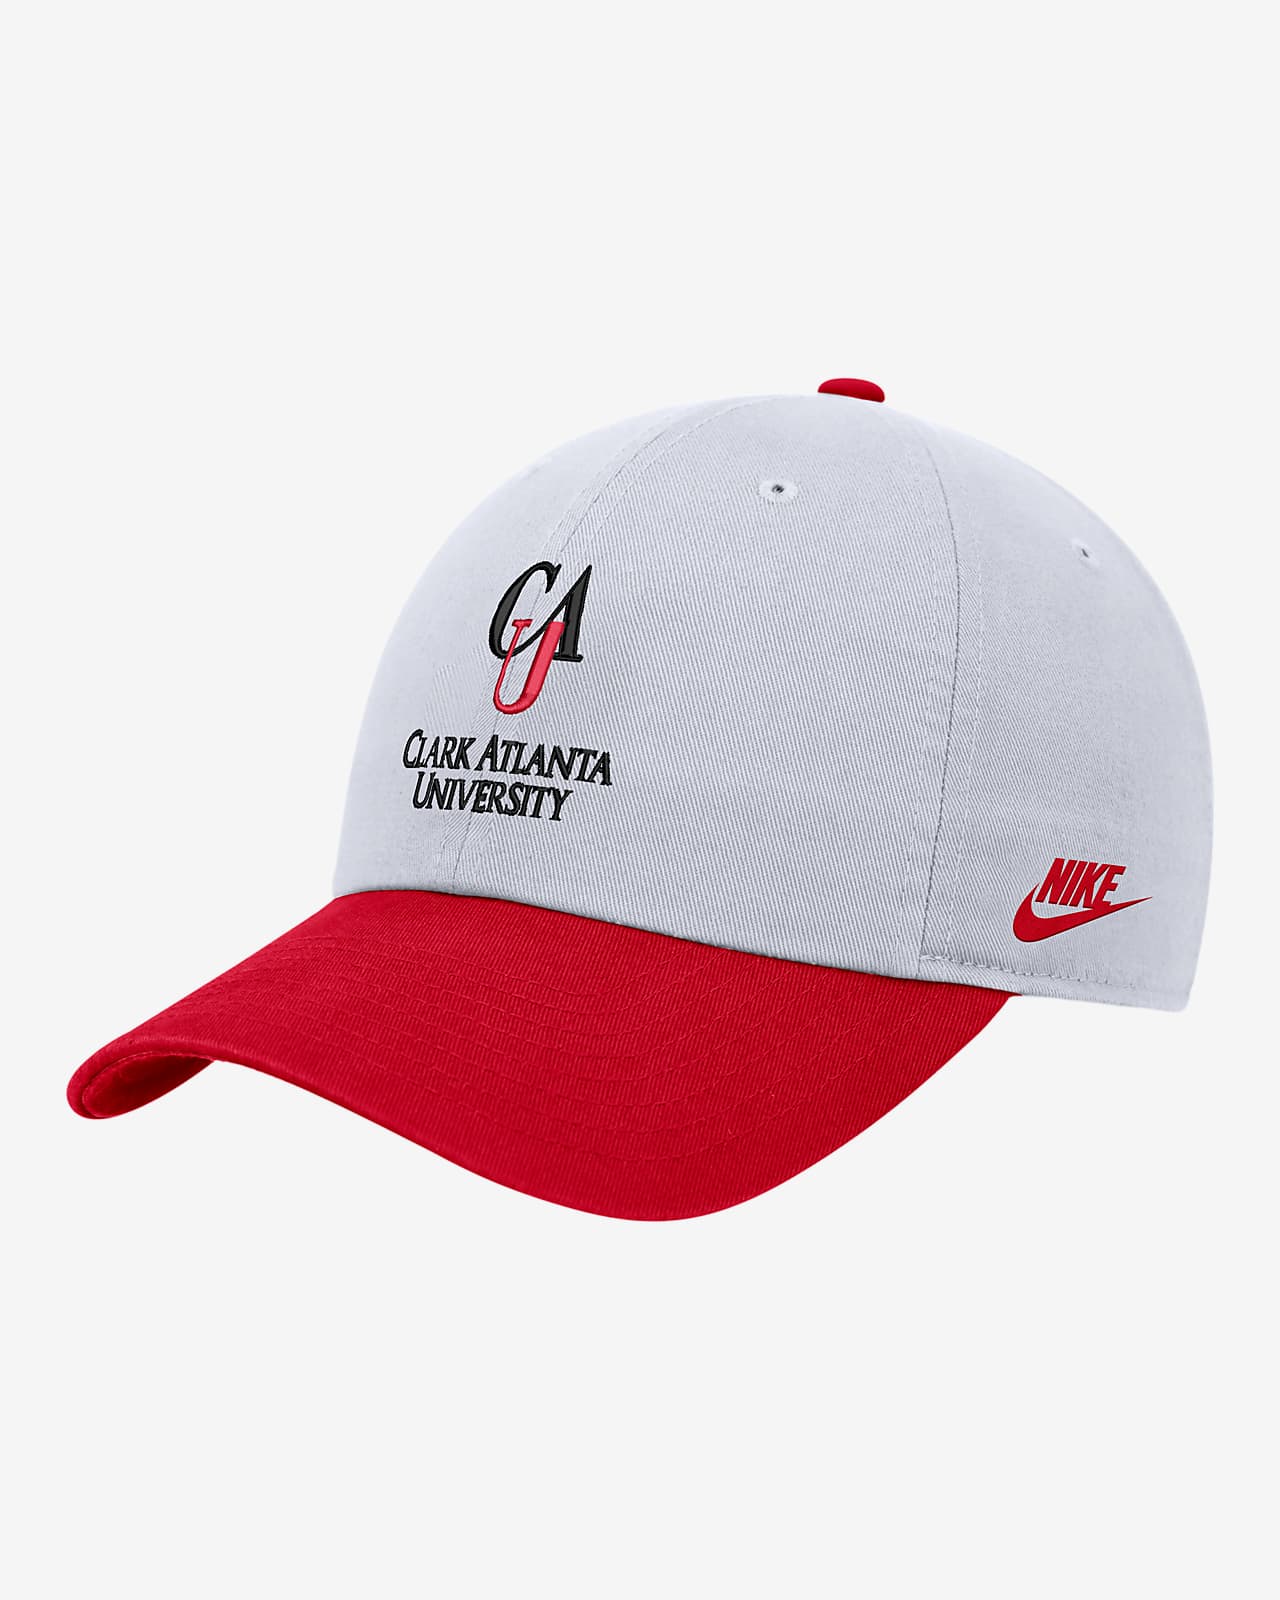 Clark Atlanta Nike College Adjustable Cap